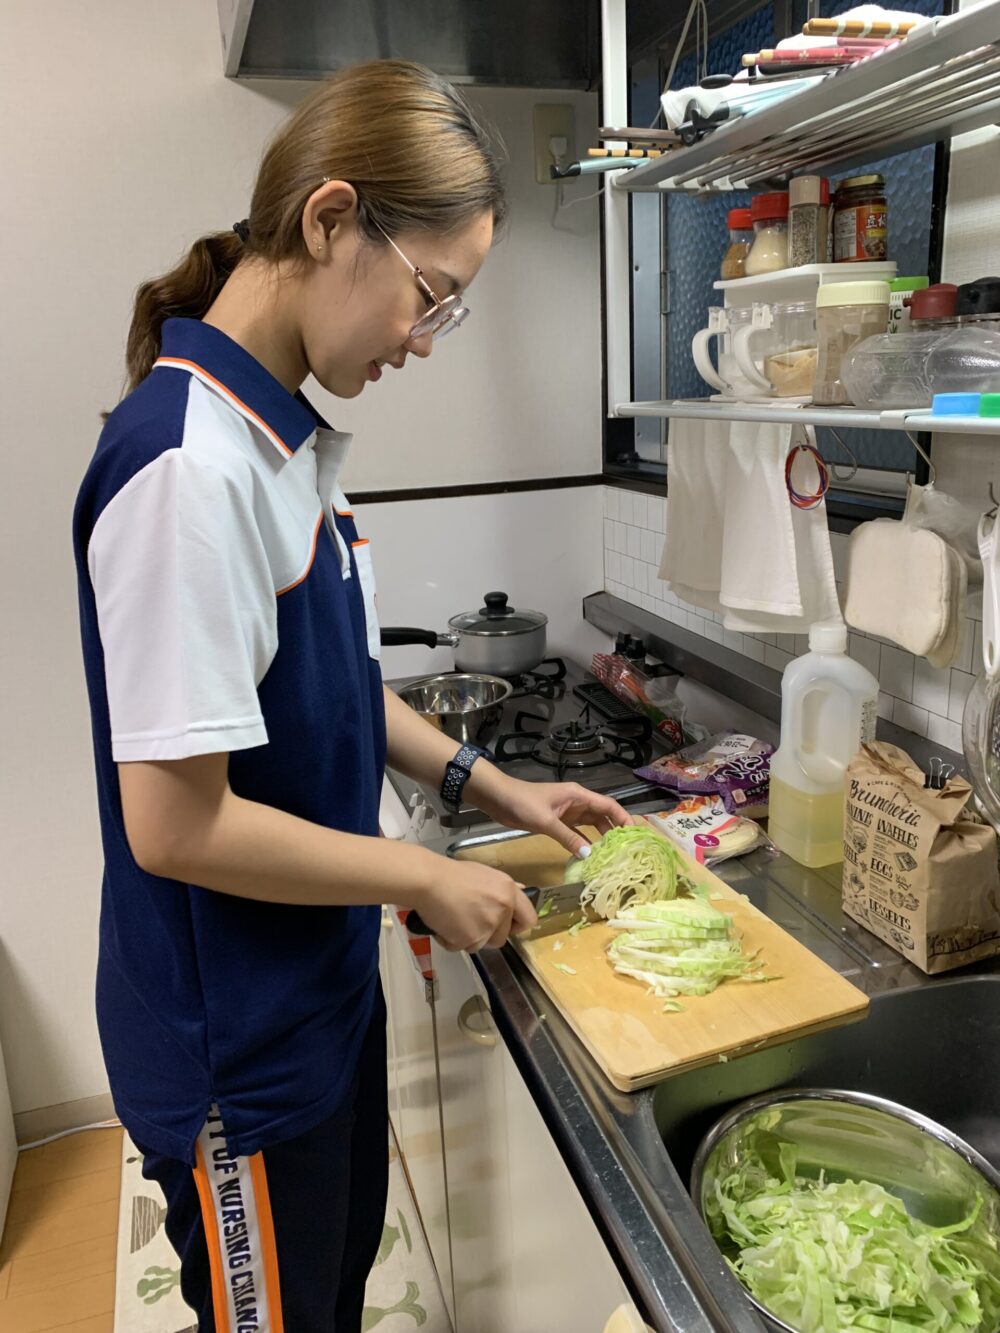 Making okonomiyaki together